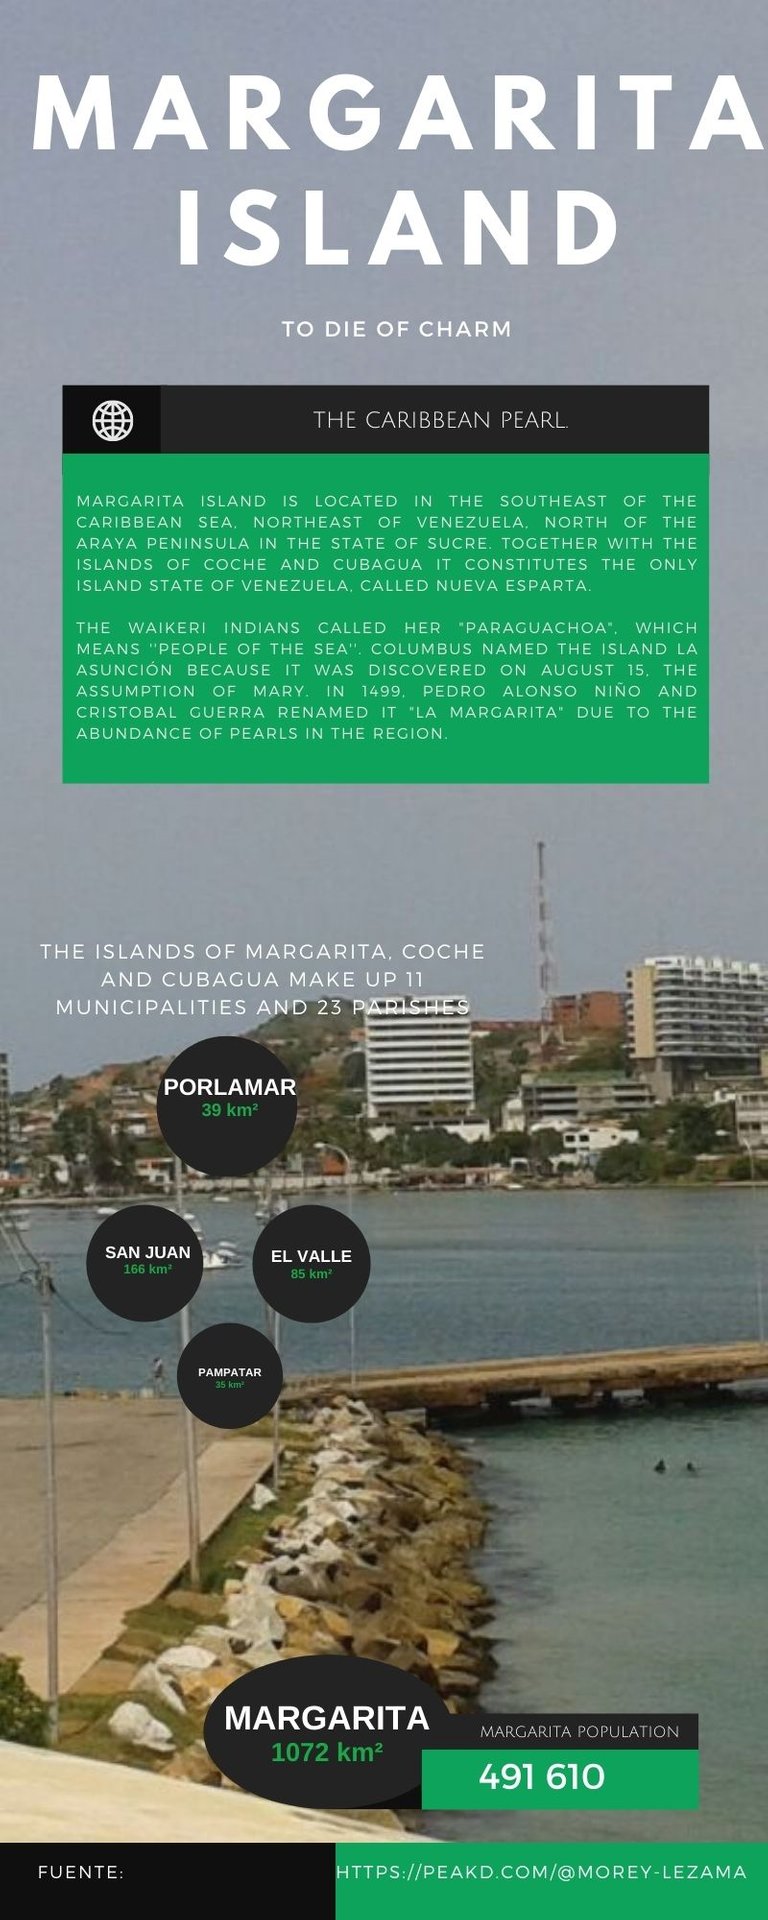 Margarita Island.jpg